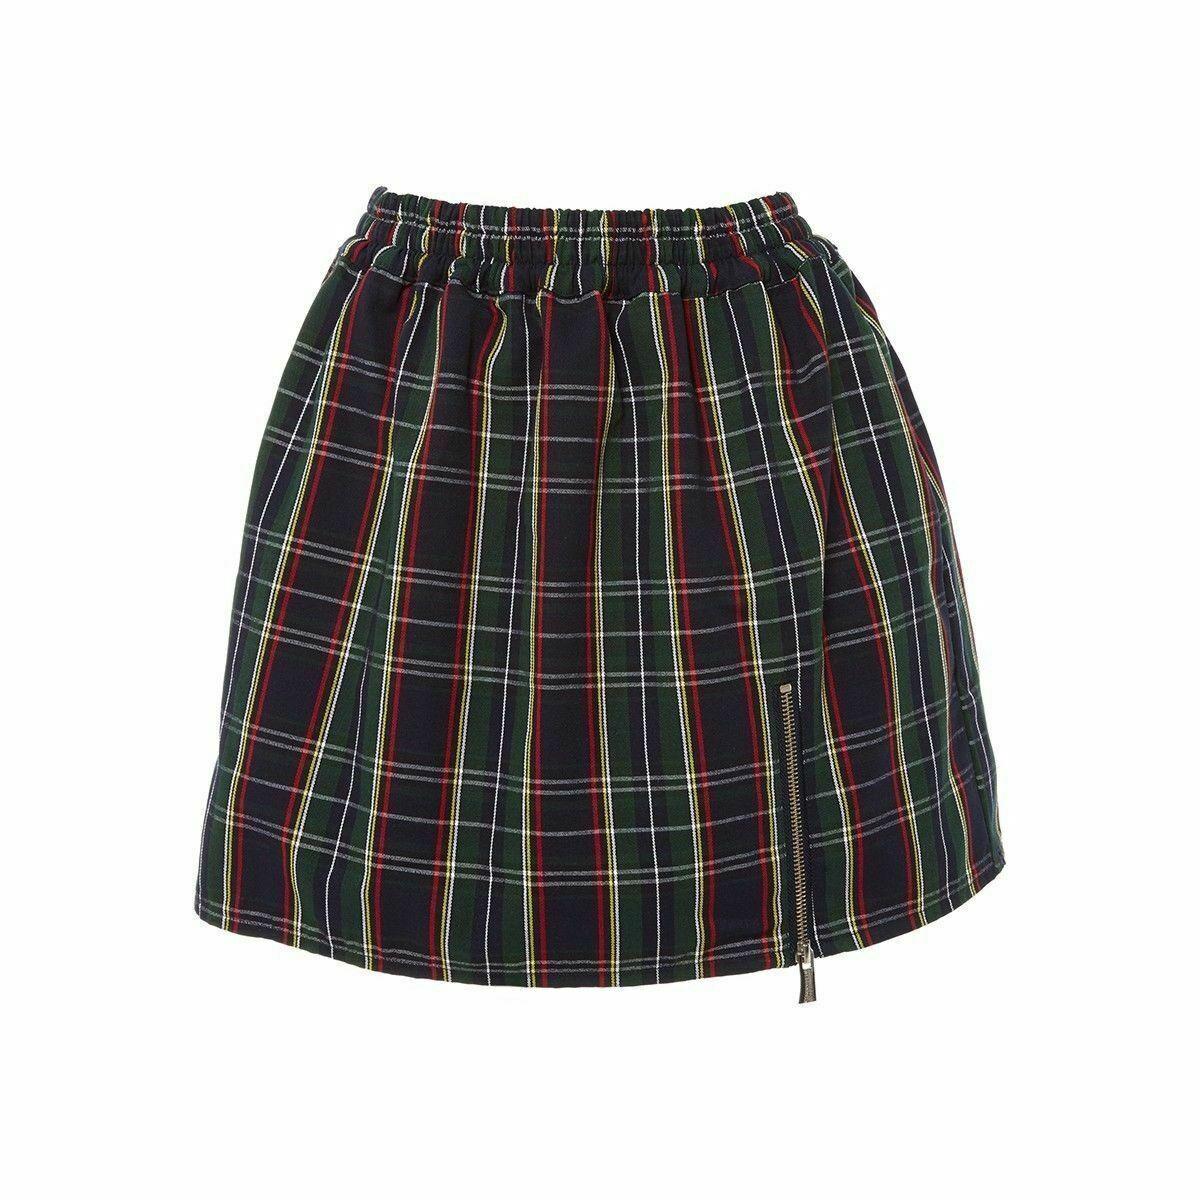 Original genuine Harrington Ltd navy tartan skirt - one size fits all